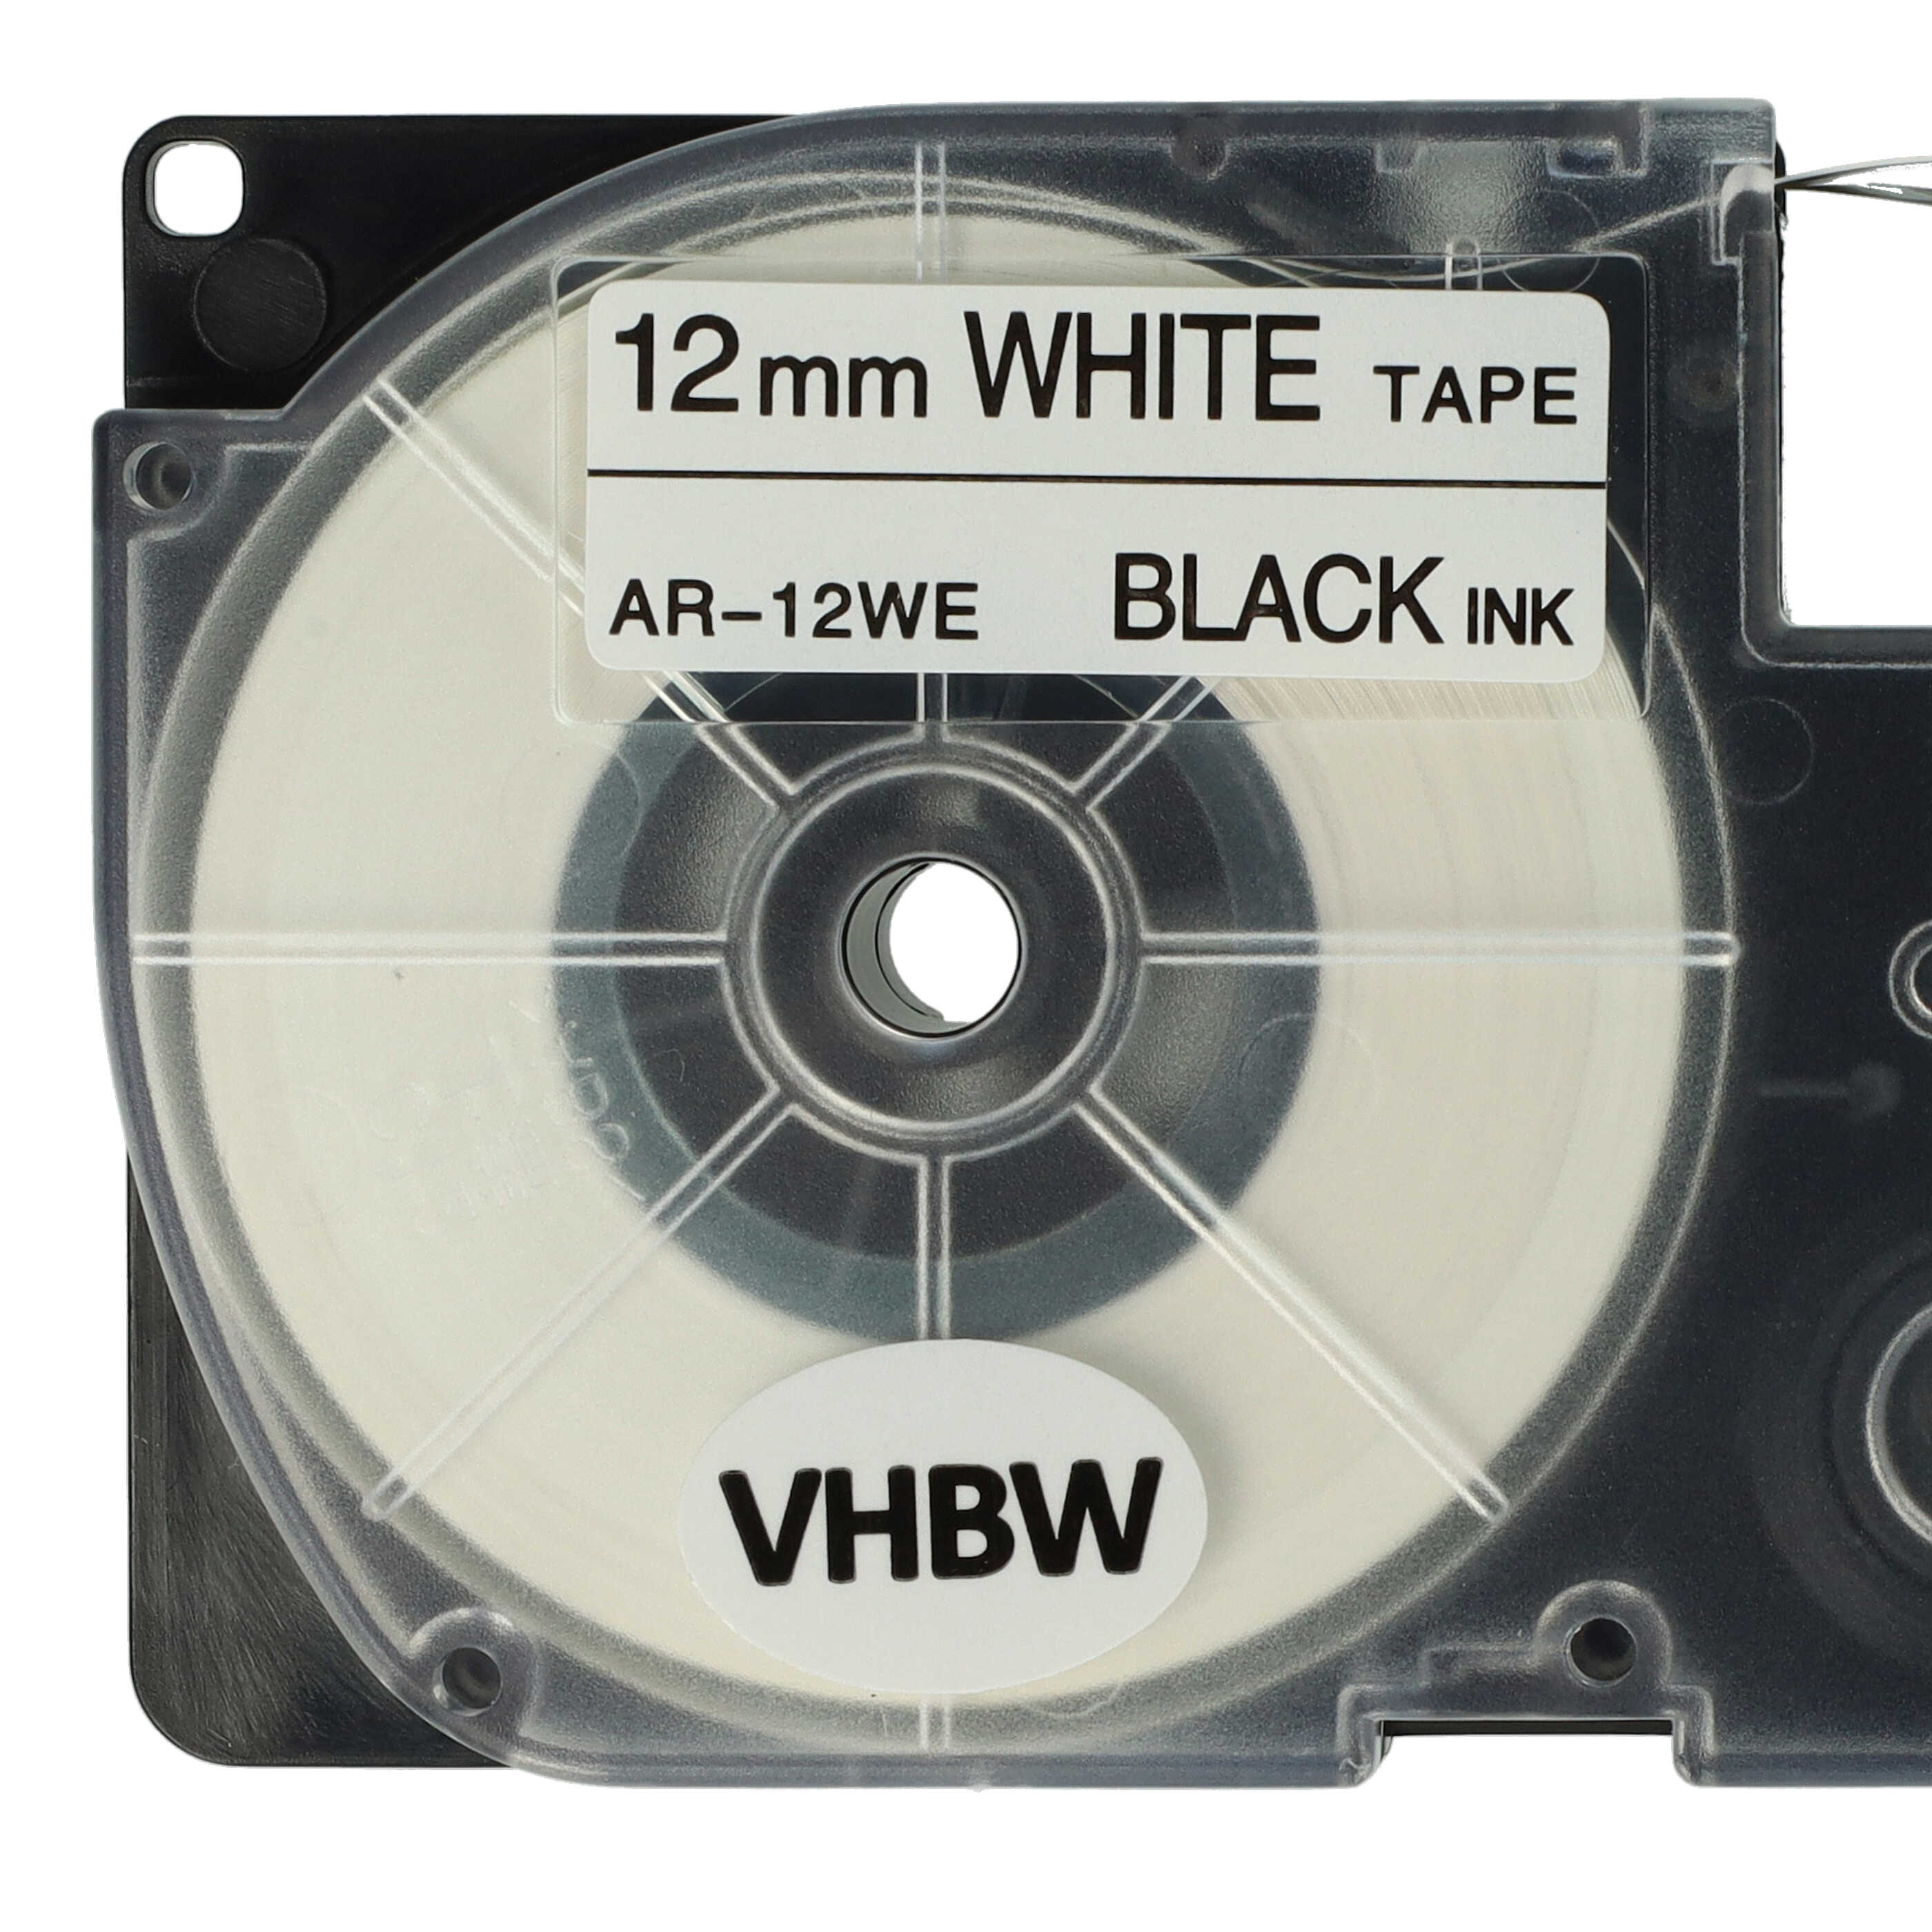 5x Casete cinta escritura reemplaza Casio XR-12WE, XR-12WE1 Negro su Blanco